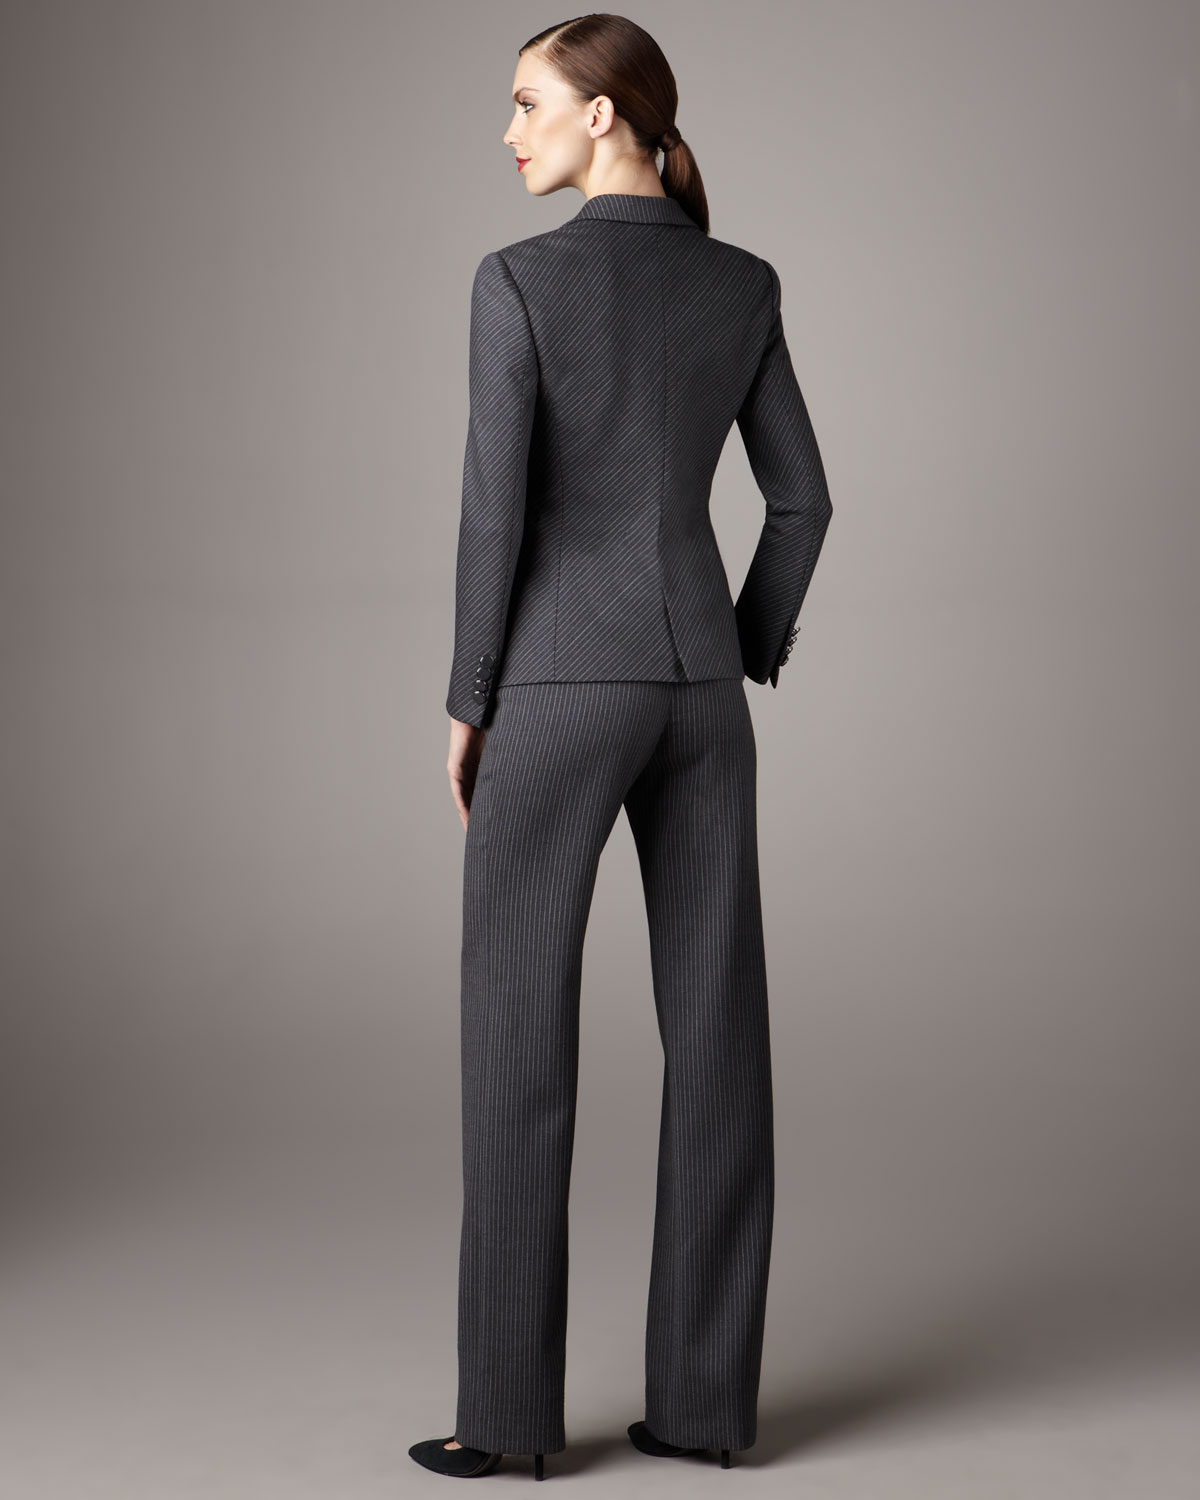 armani ladies trouser suits - 50% OFF 